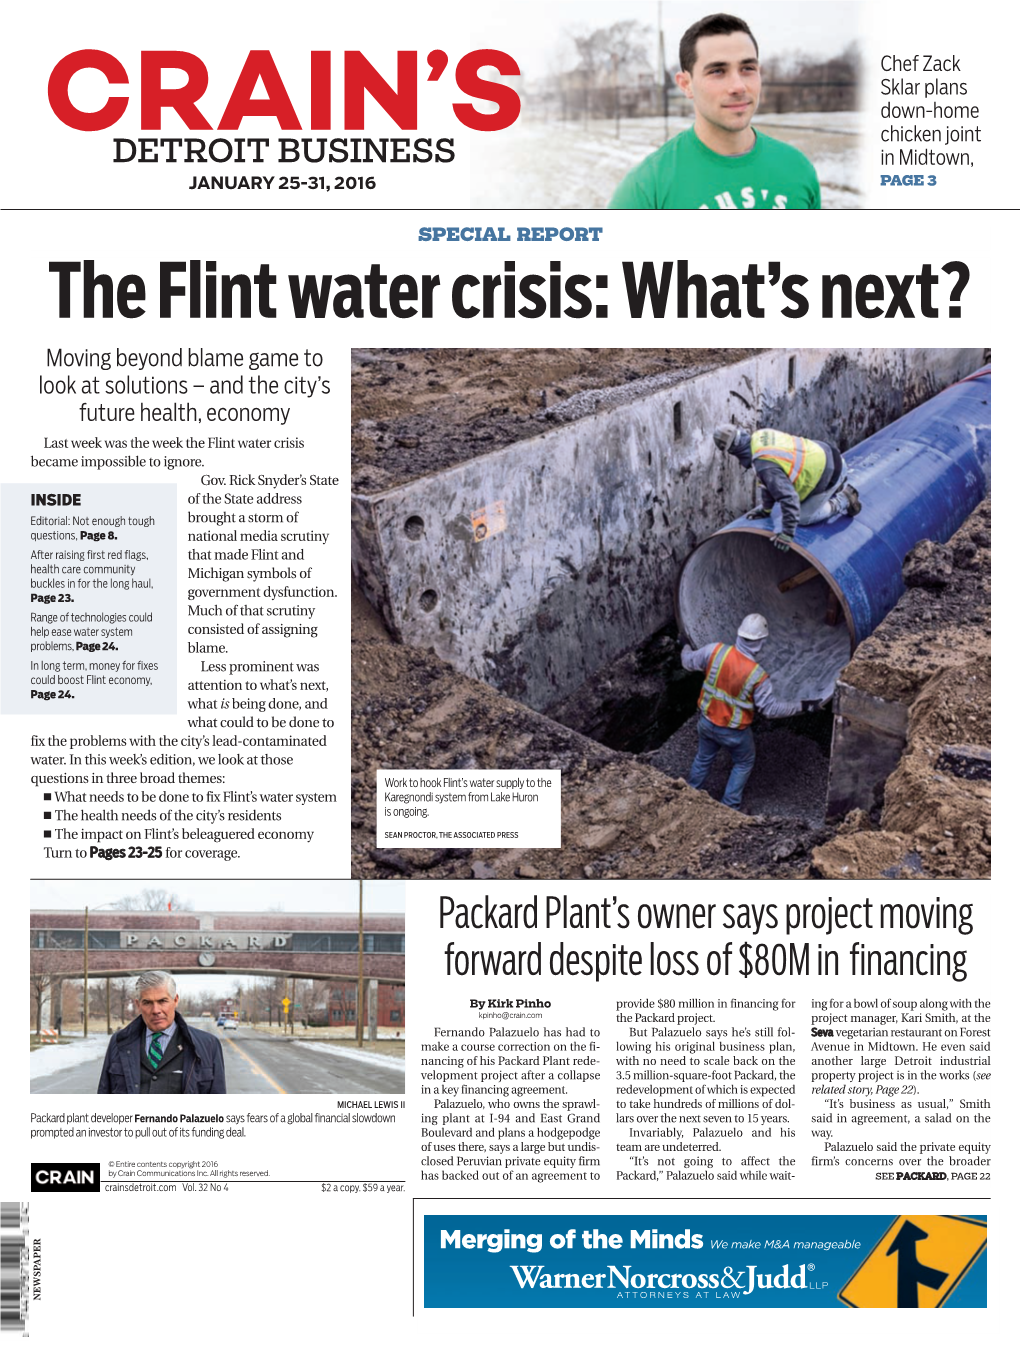 The Flint Water Crisis